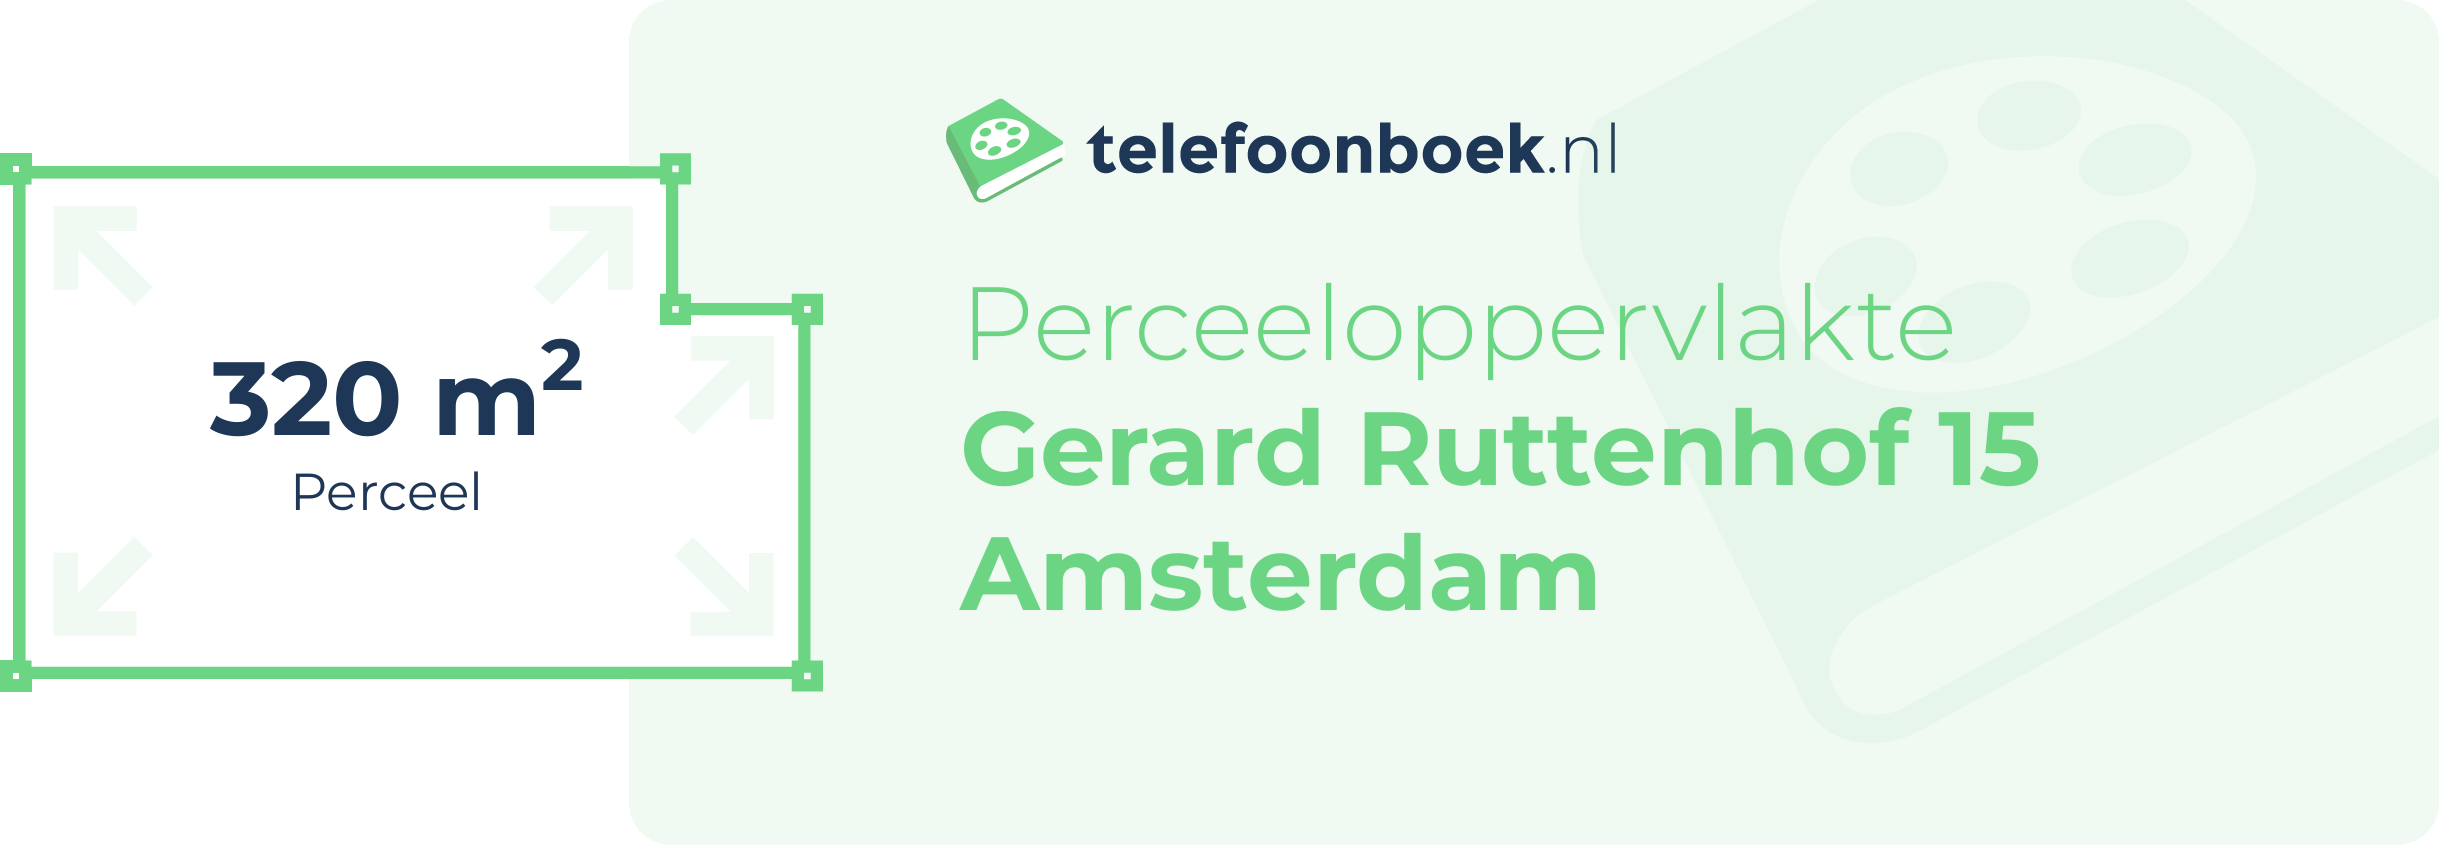 Perceeloppervlakte Gerard Ruttenhof 15 Amsterdam